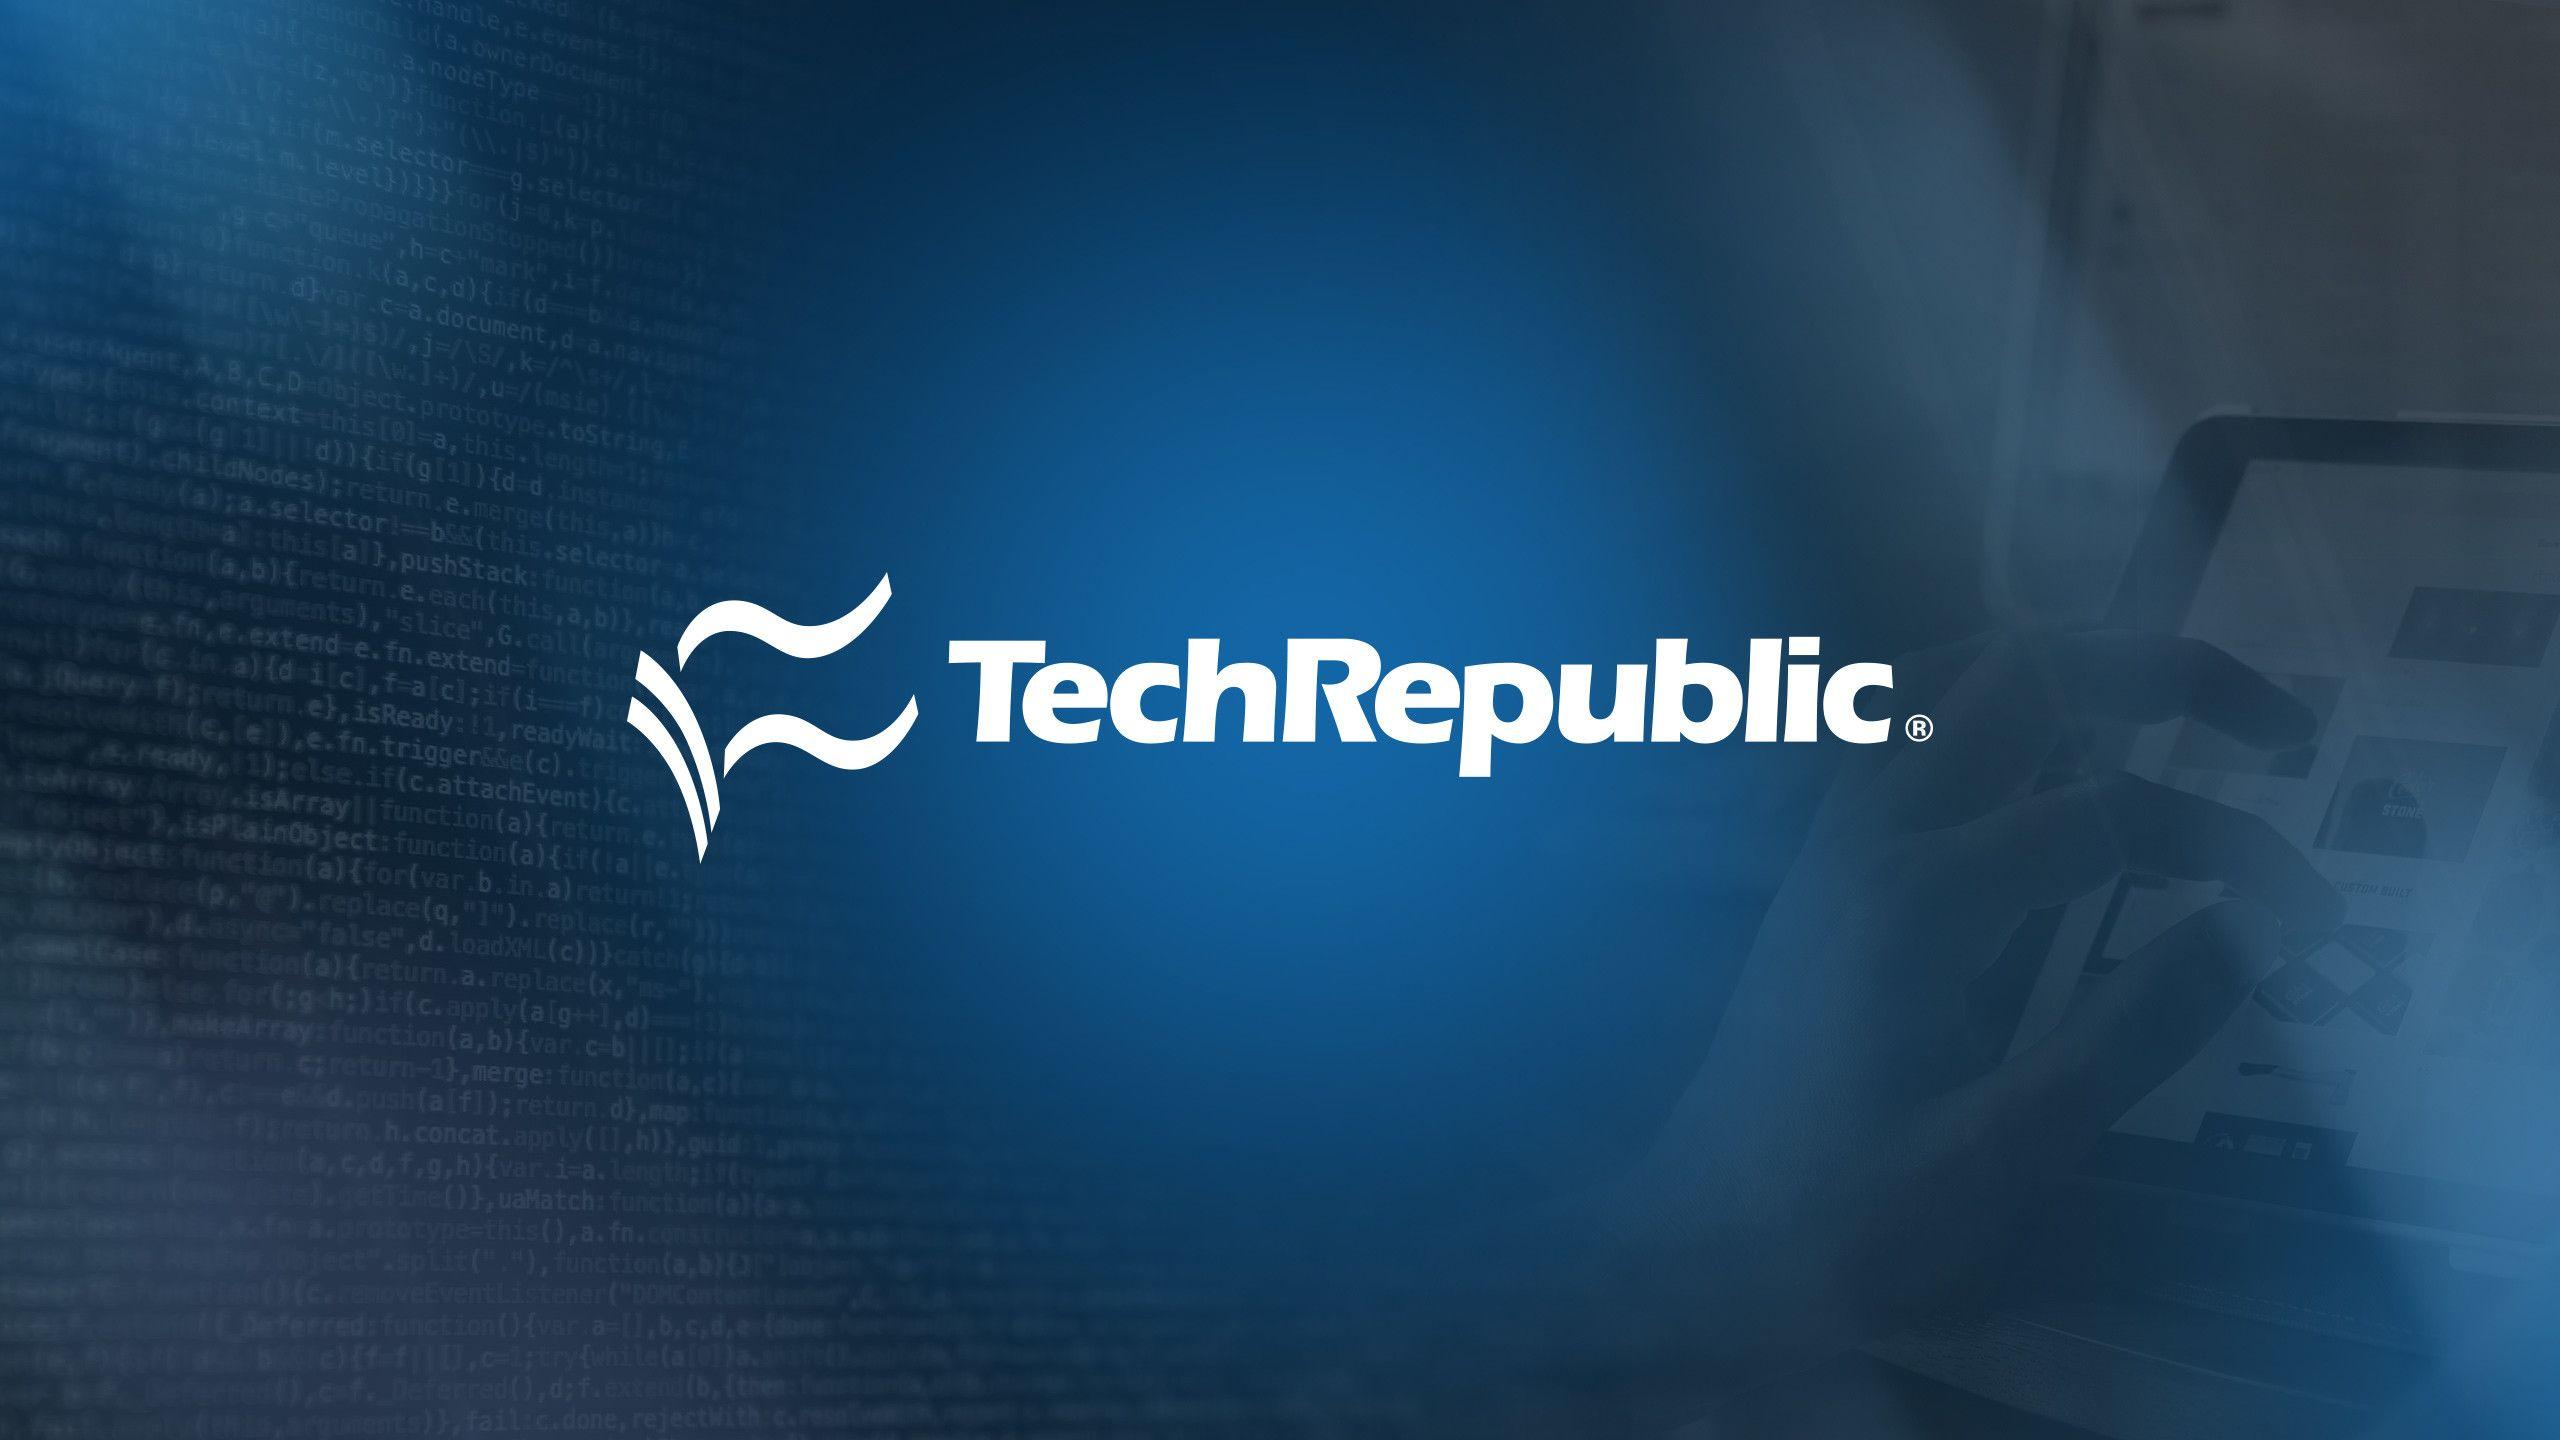 TechRepublic Logo - TechRepublic | LinkedIn